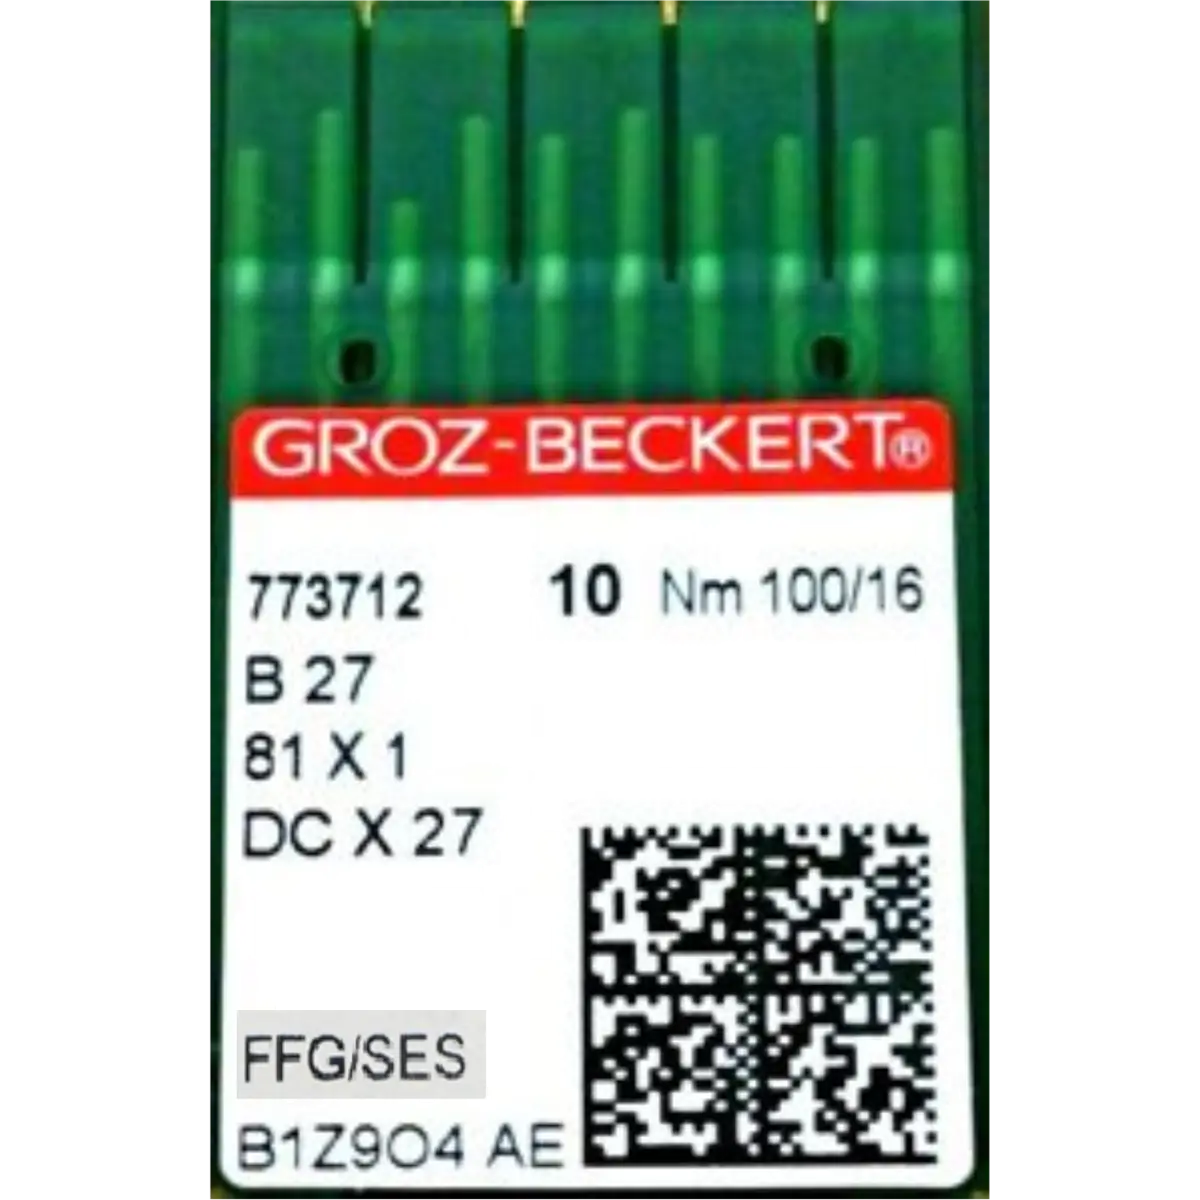 Industrial Overlock Needles B27, DCX1, DCX27, 81x1 Groz-Beckert